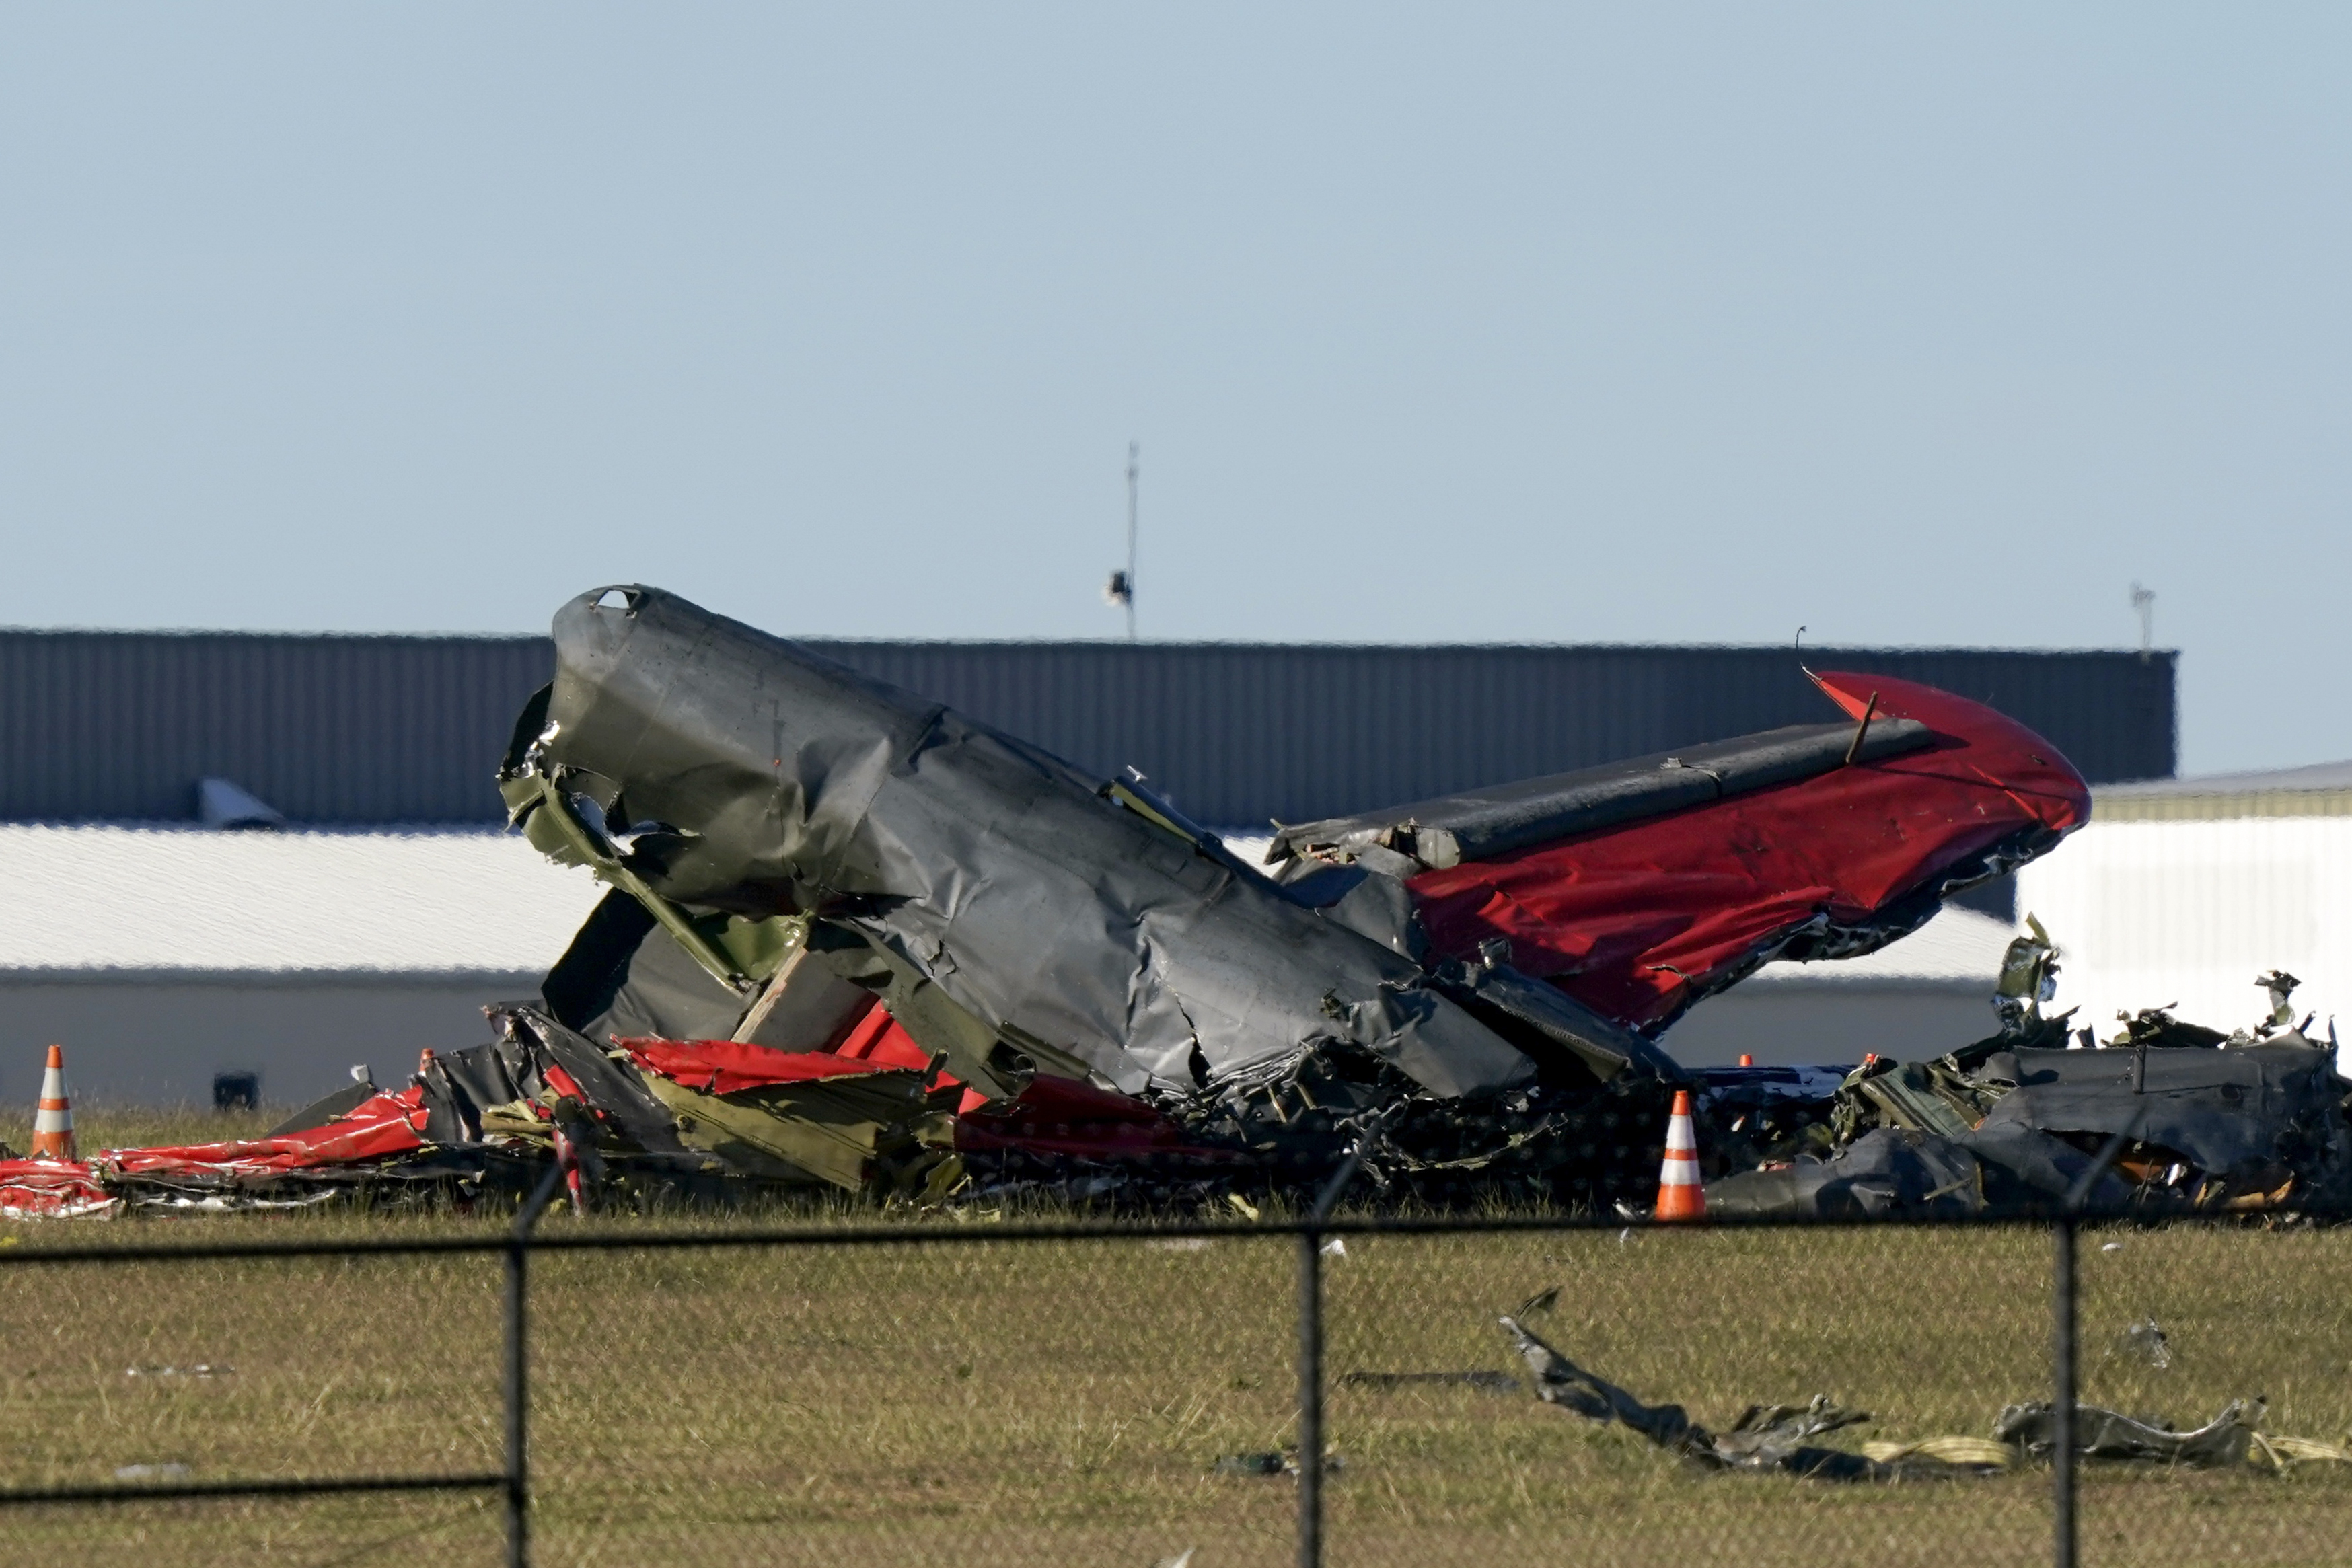 Airplane crashes. P-63 and b-17 crash at Dallas. Столкнулись два самолета. Столкновение самолётов в Далласе.